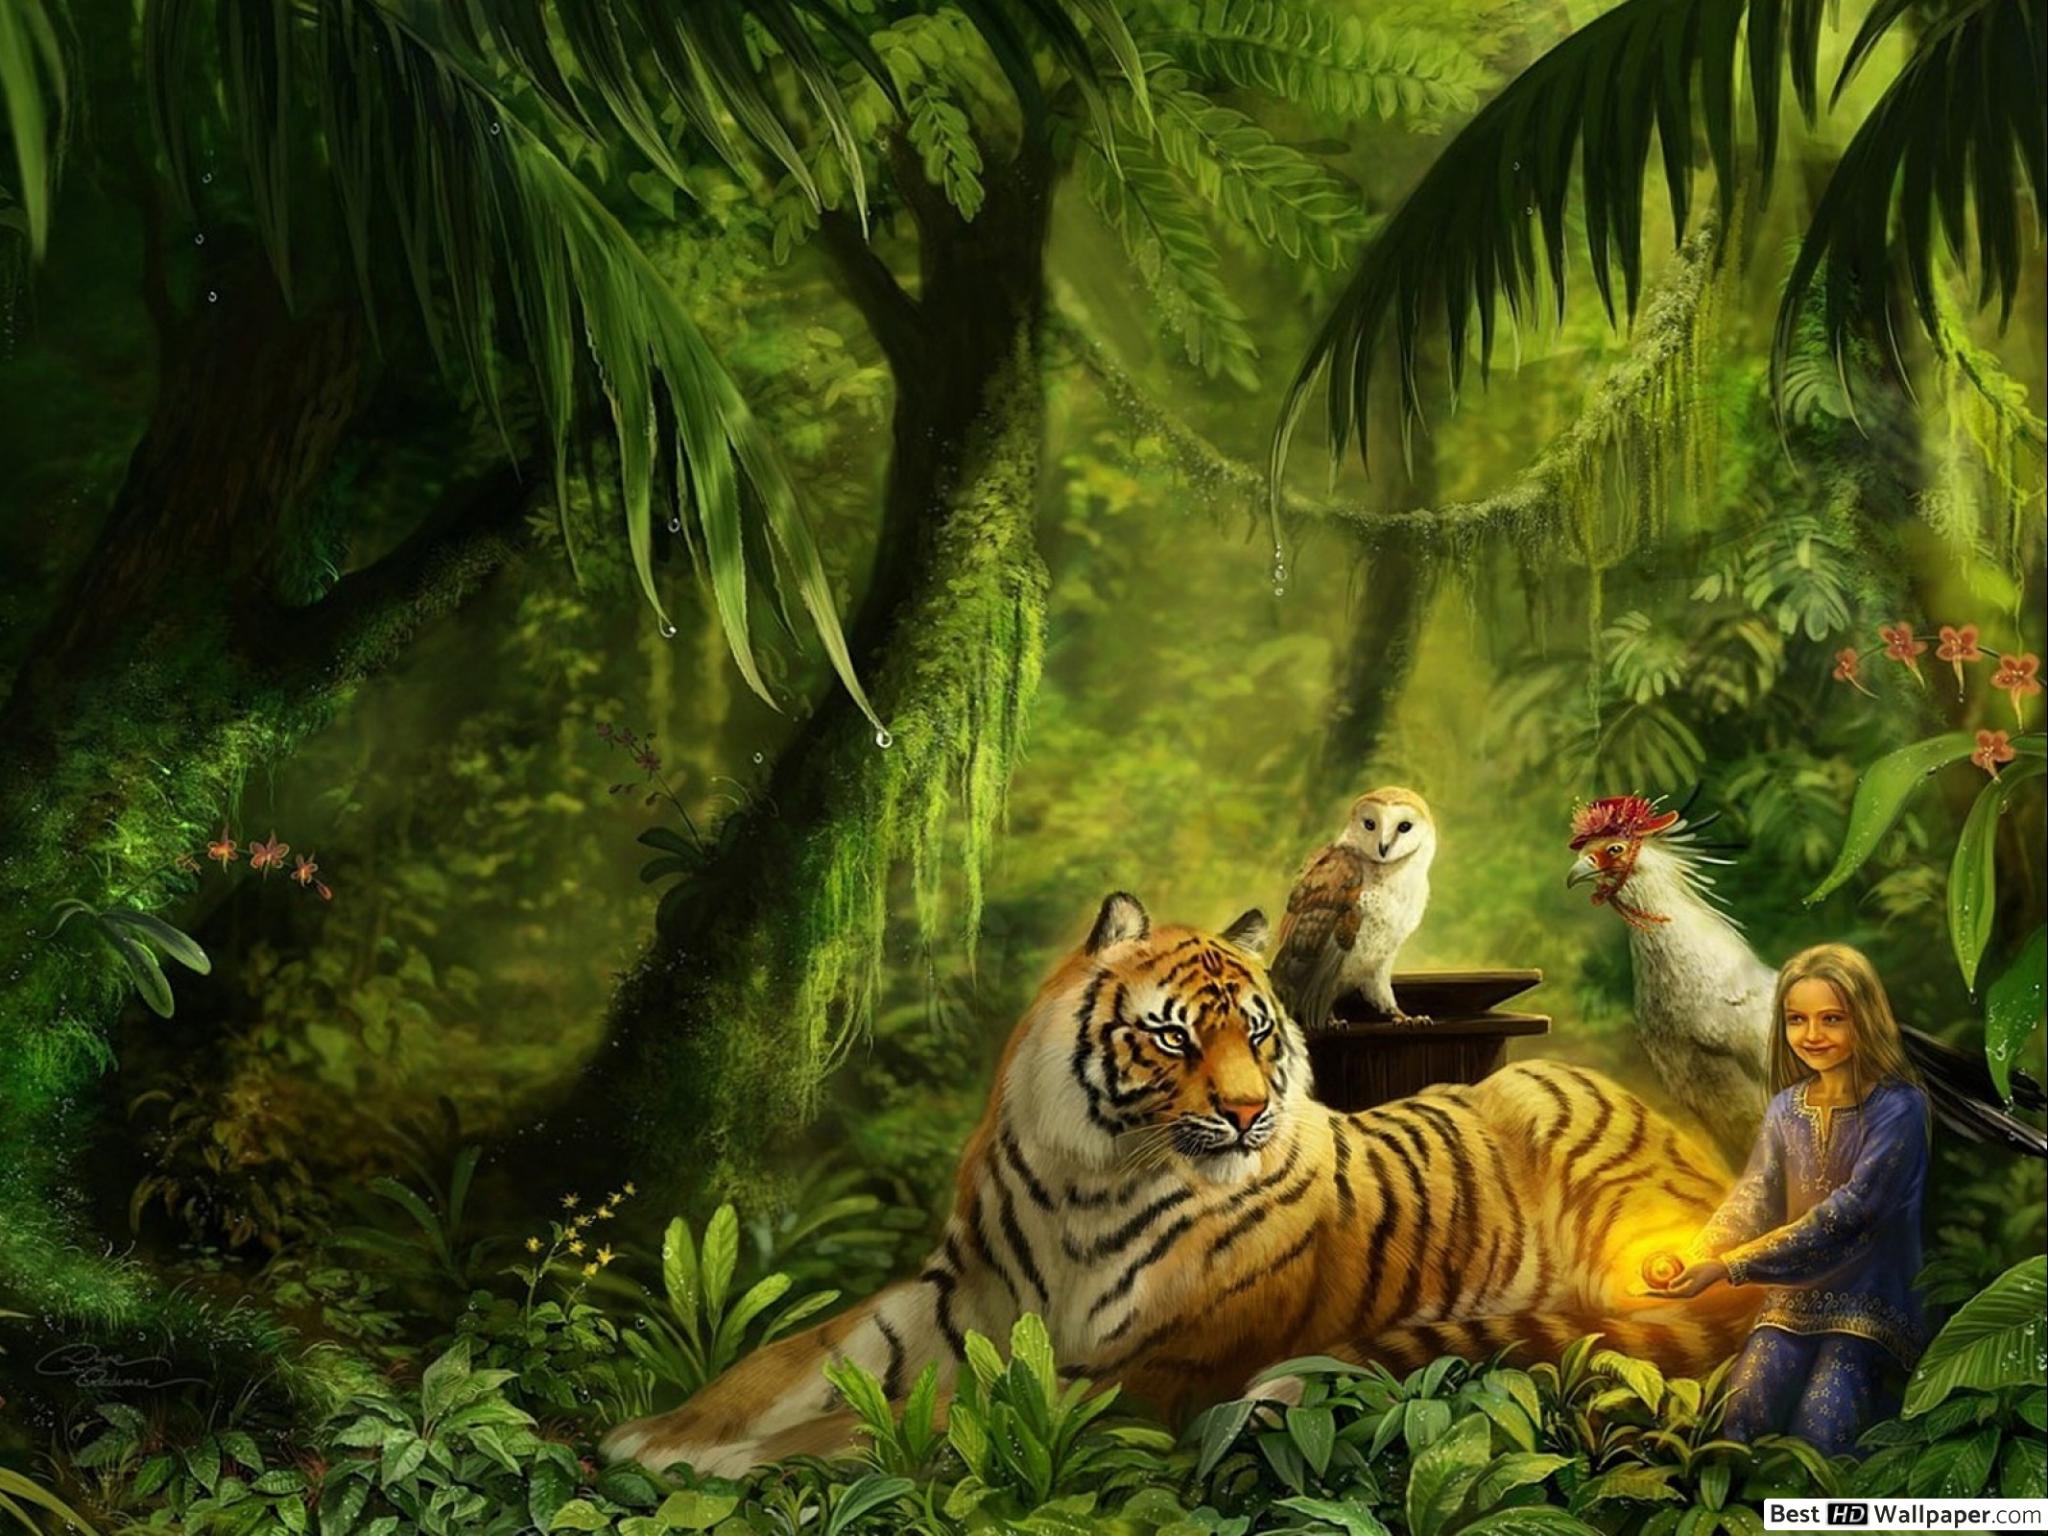 Tiger in magic jungle forest HD wallpaper download